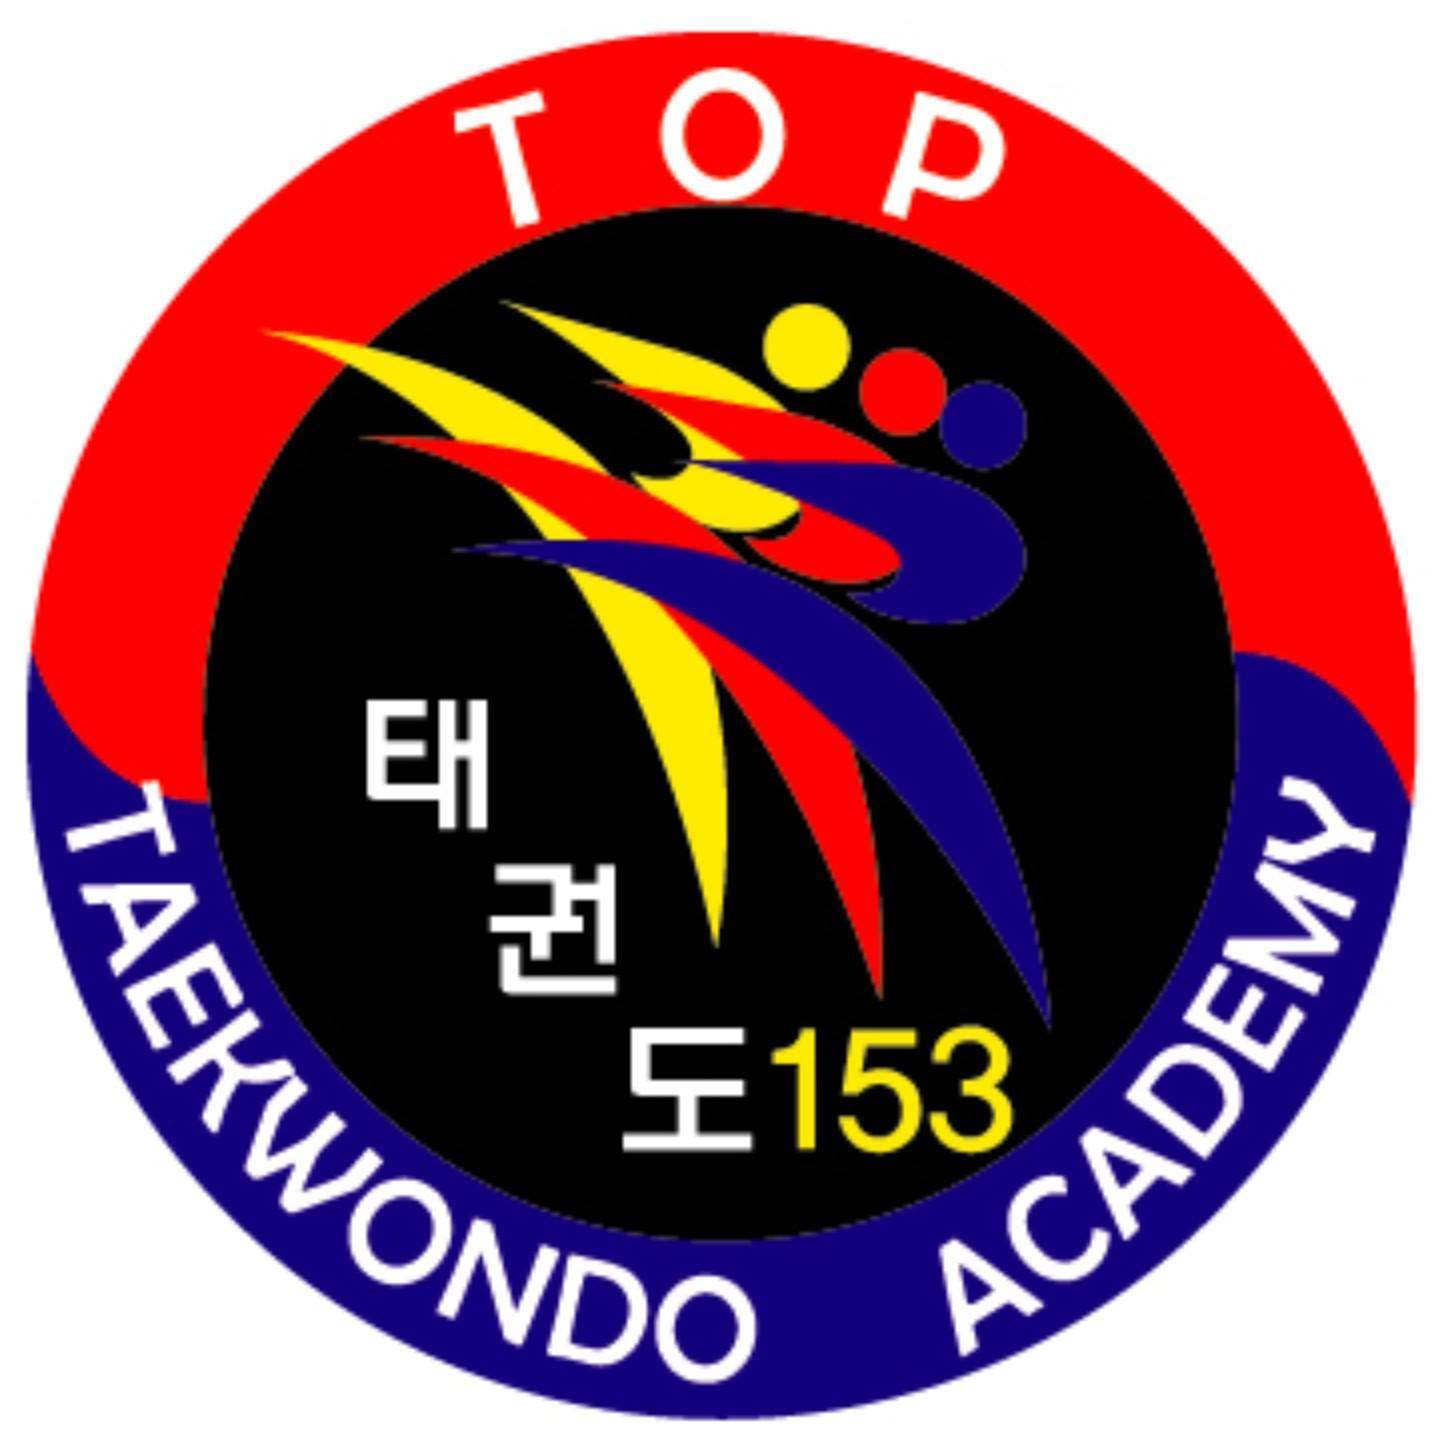 Top Taekwondo Academy @ Toa Payoh